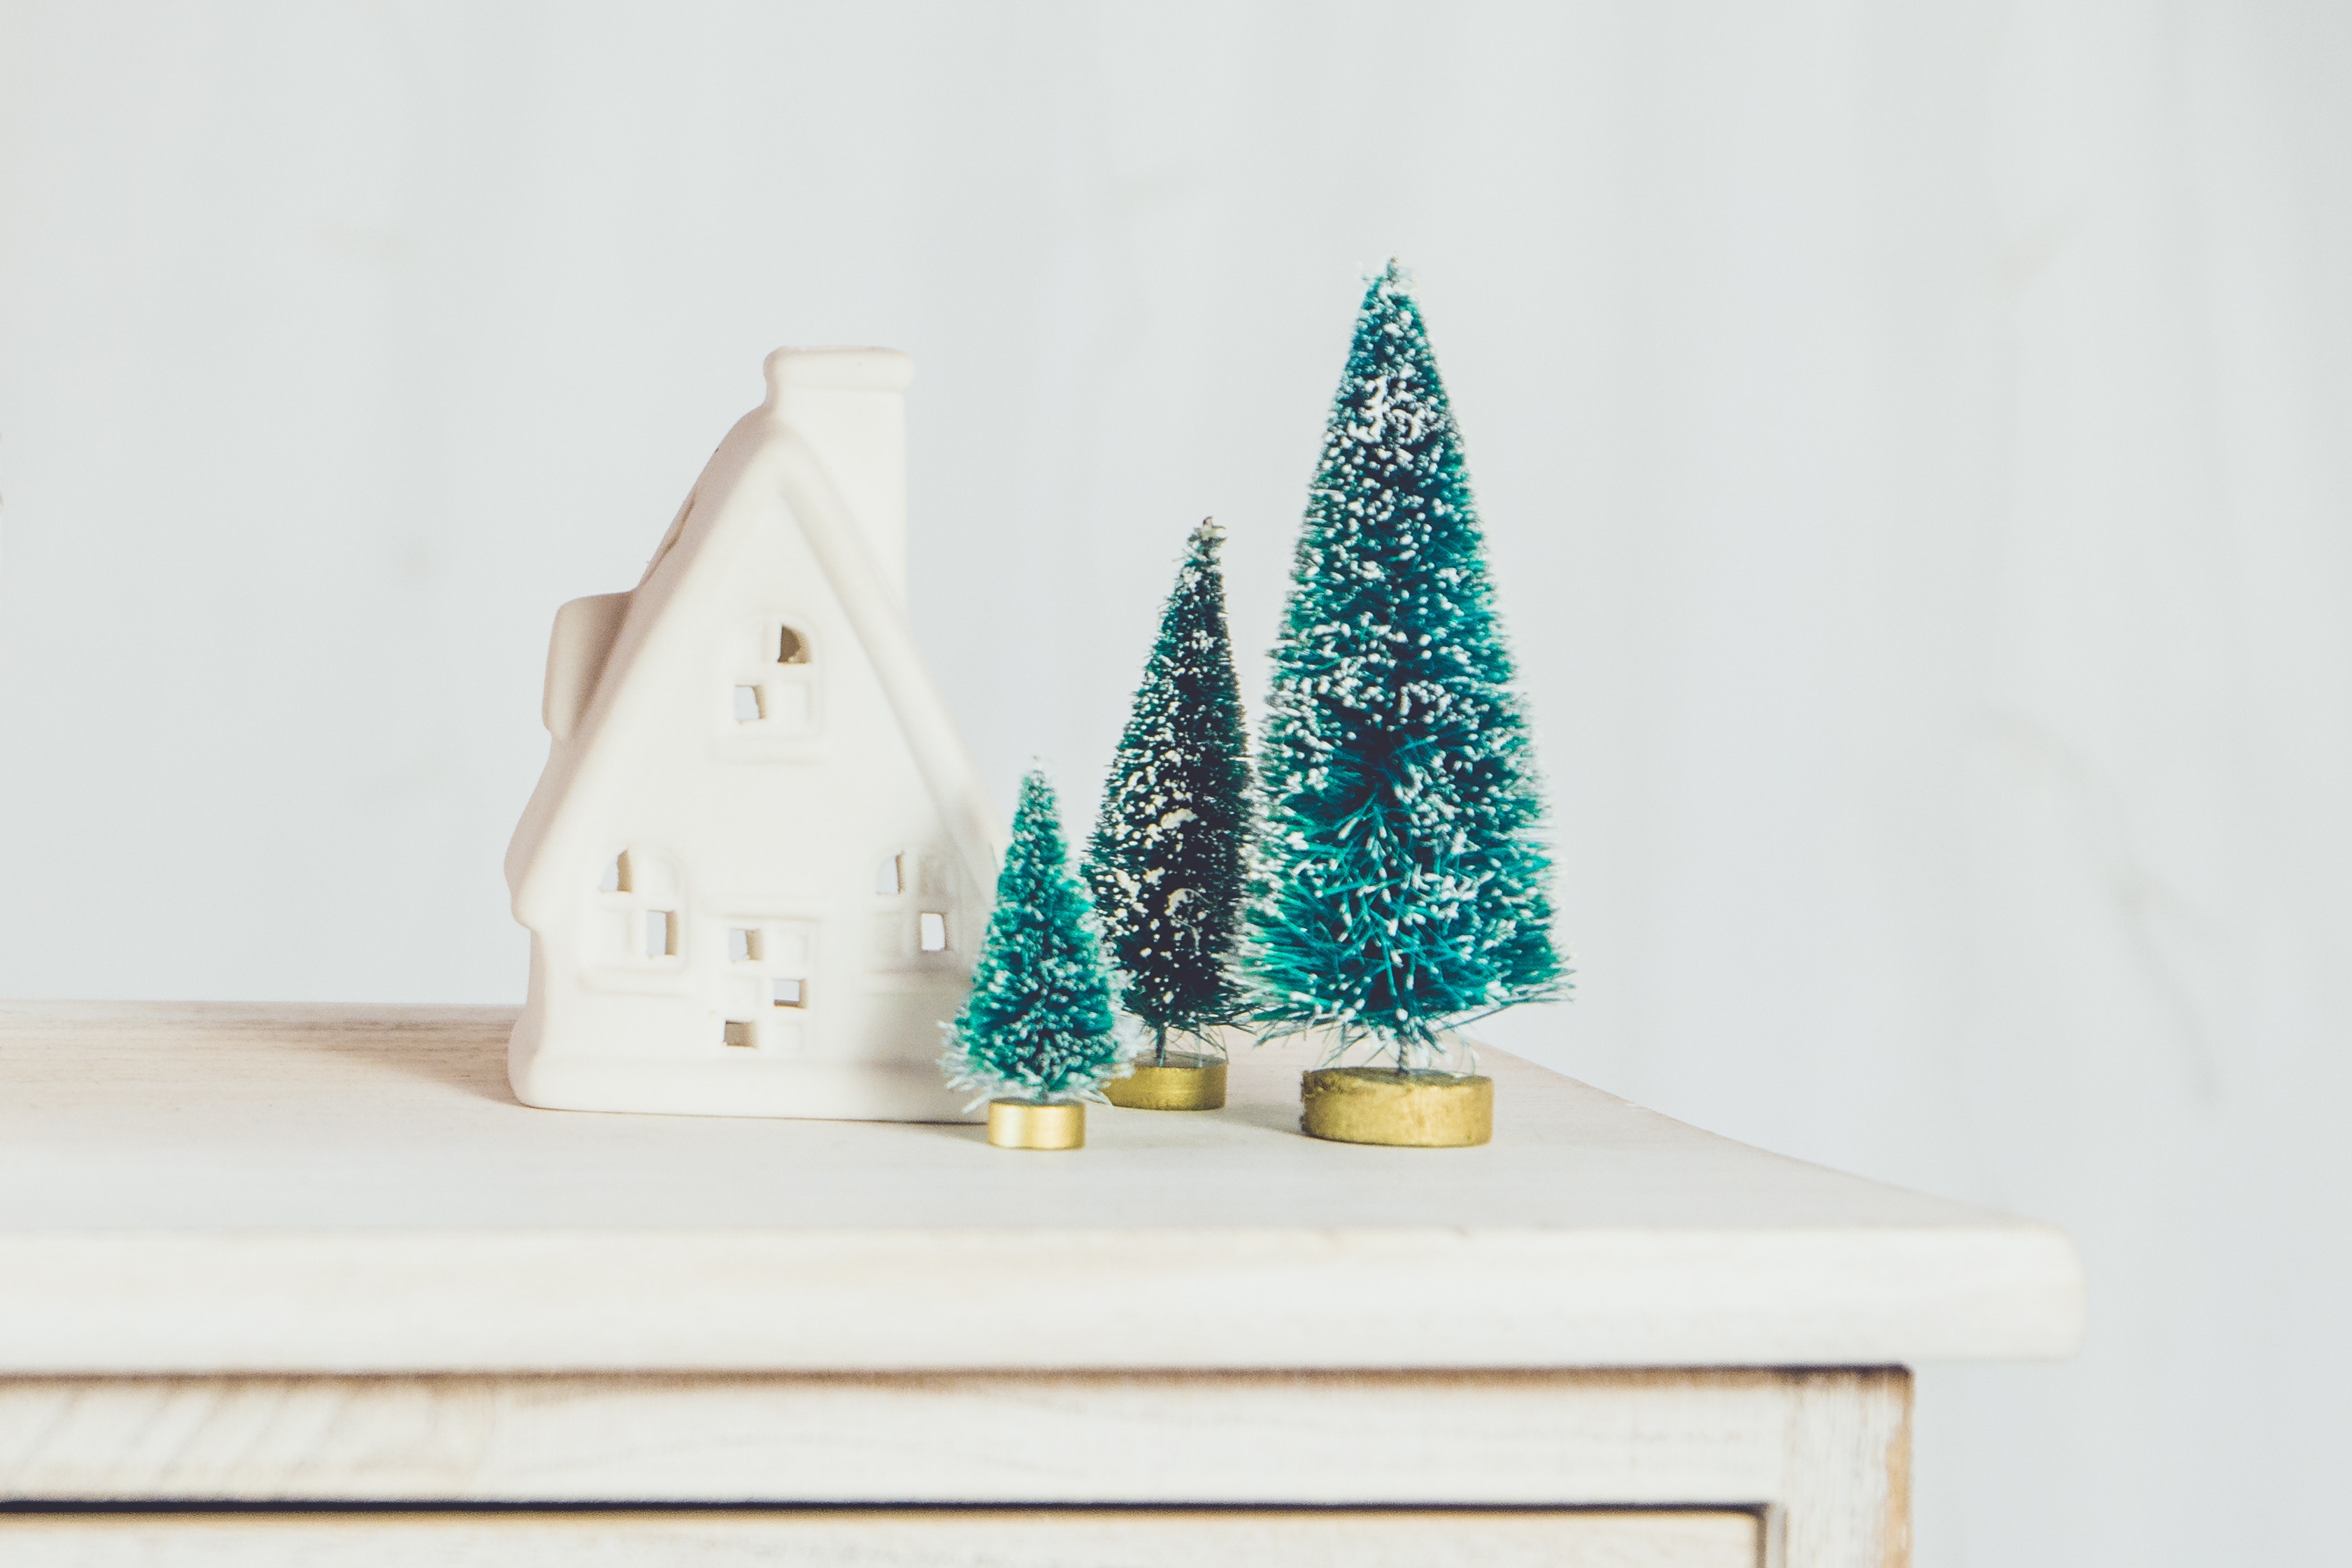 Miniature White House and Christmas Trees